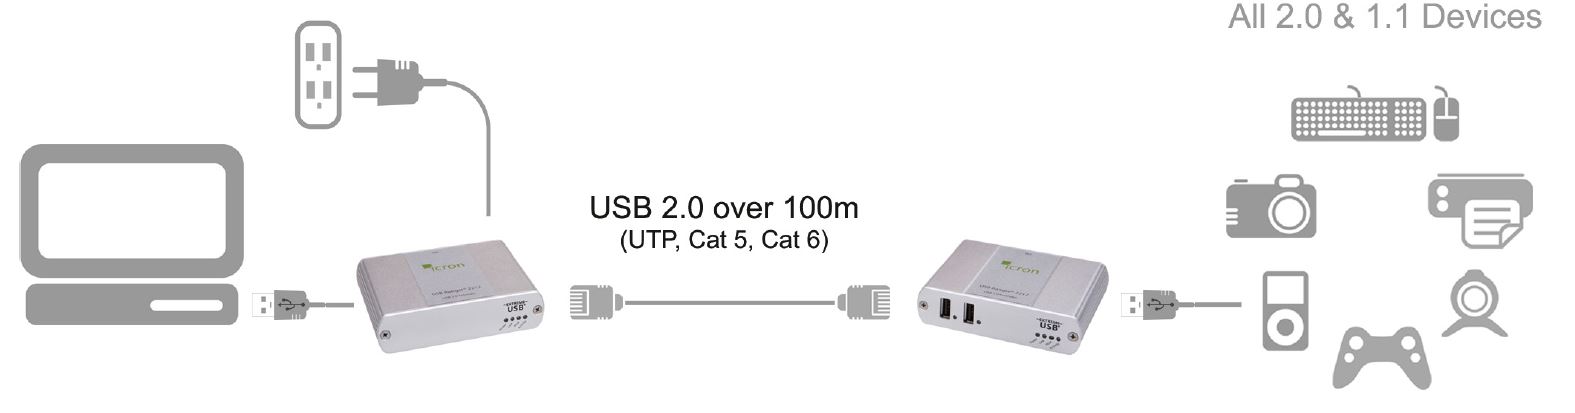 00-00253-icron-usb-2-0-ranger-2212-usb-extender-dual-port-cat-5e-100m-diagramm